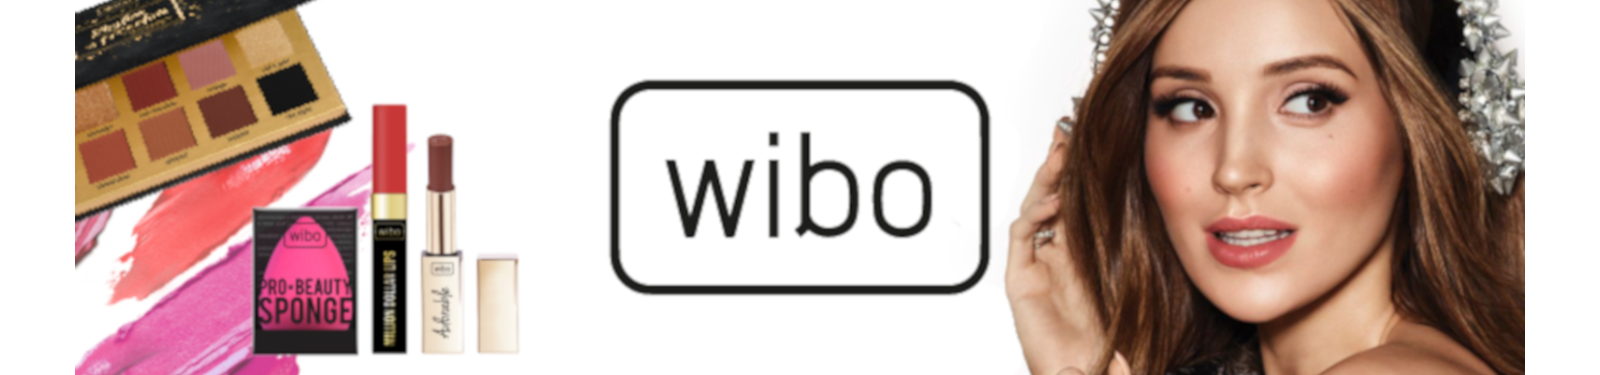 wibo-banner